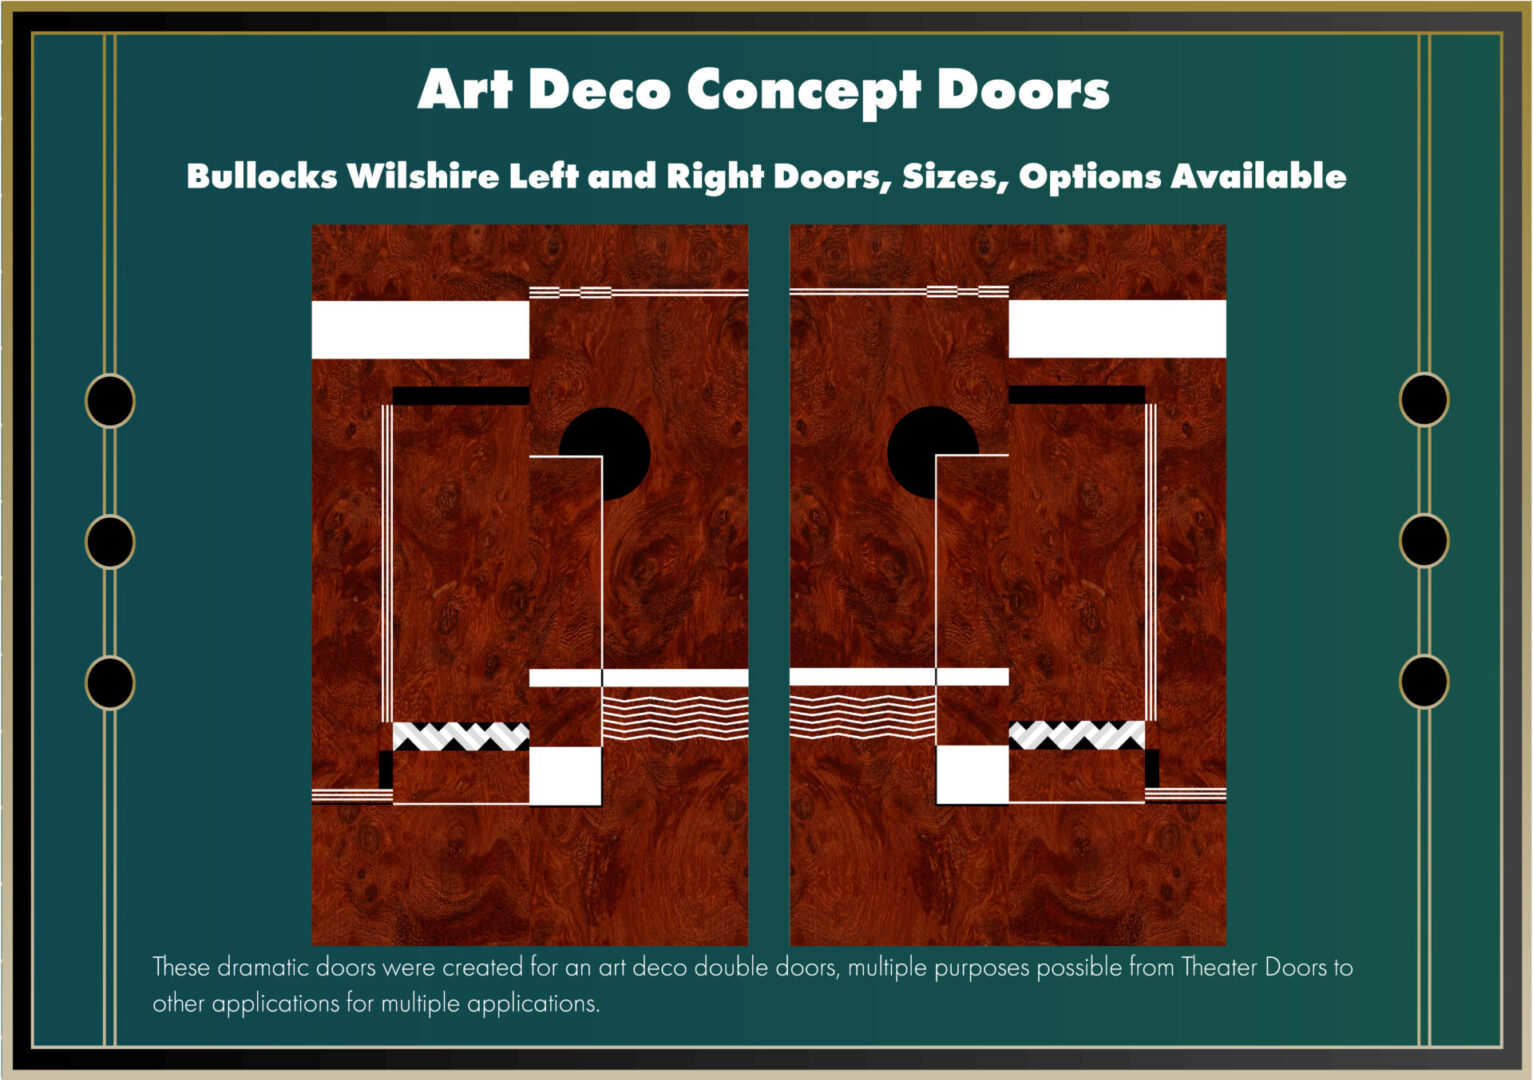 Bullock Wilshire Left and Right Art Deco Concept Doors